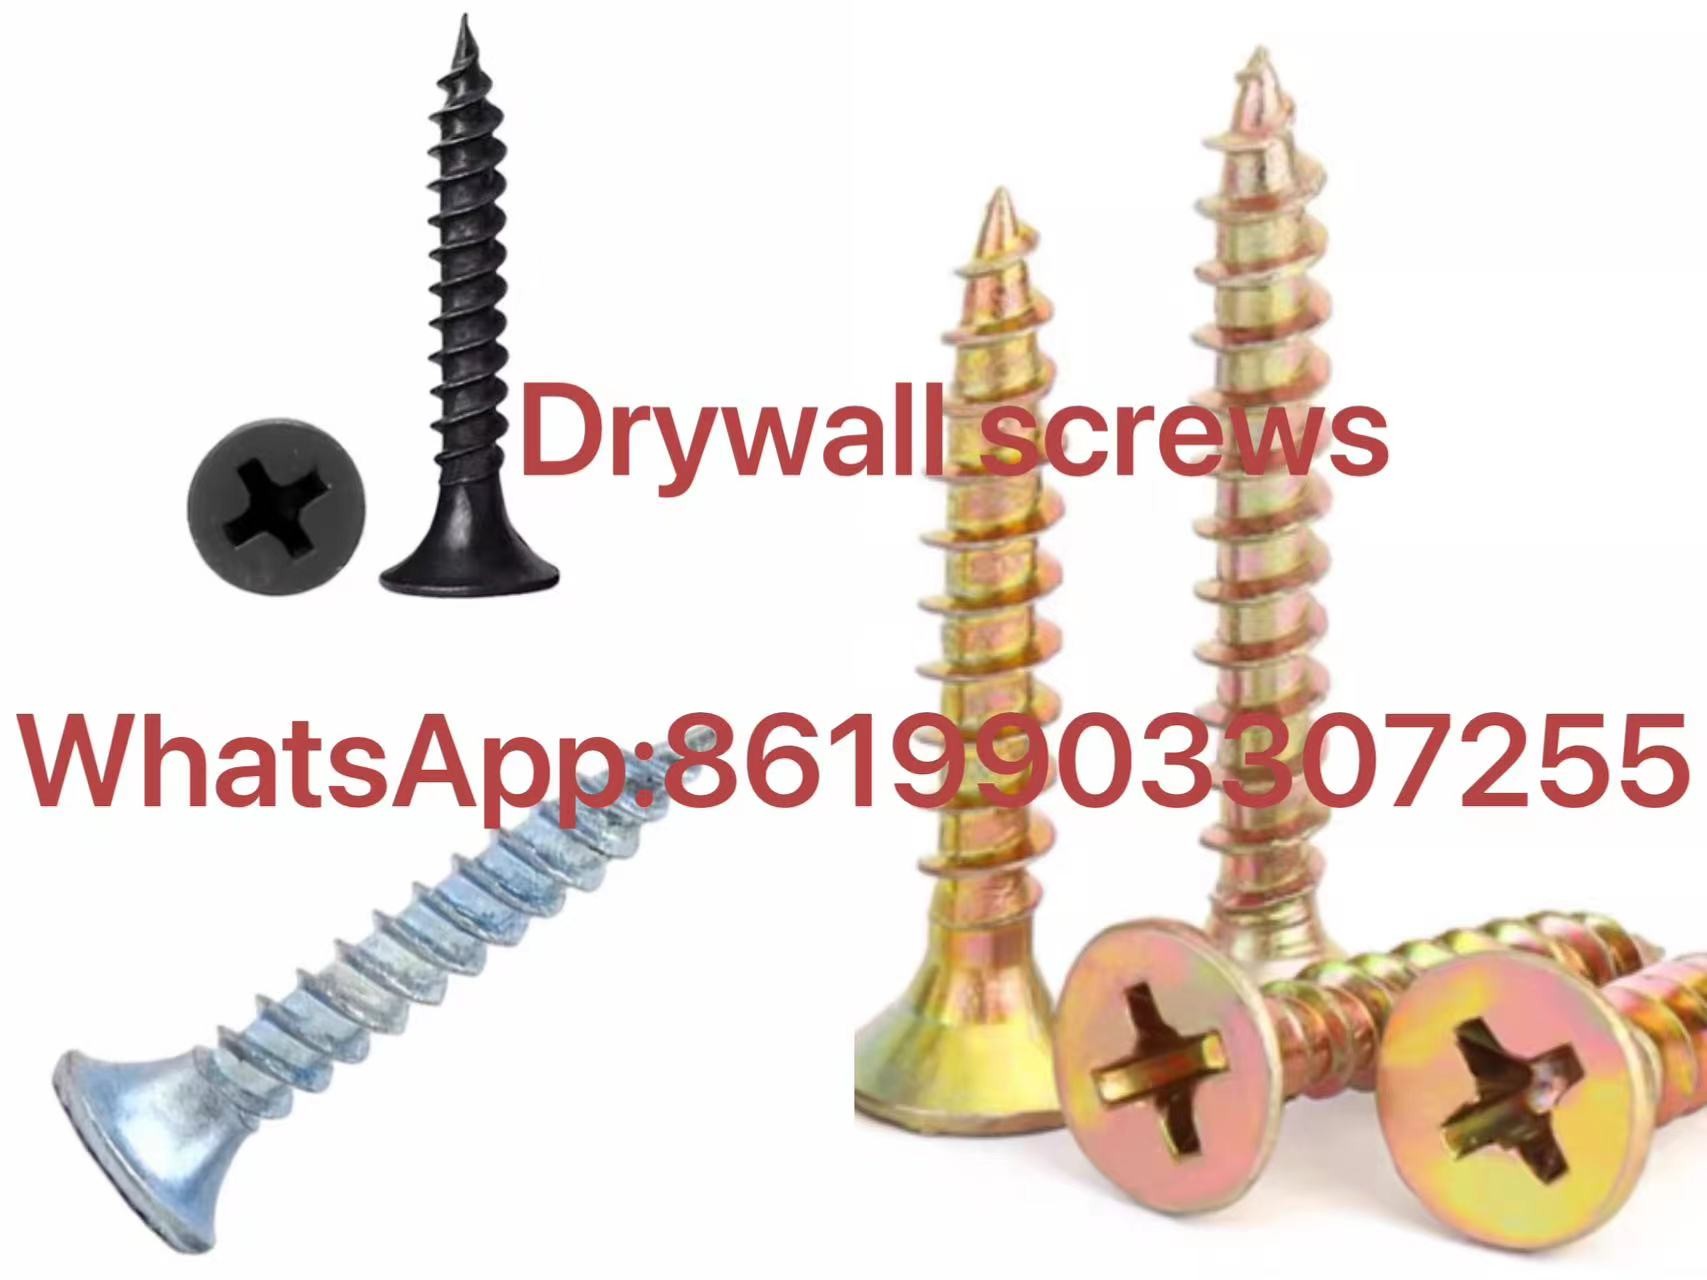 drywall/  screws fastener factory support costomization Whatsapp 8619903307255-image